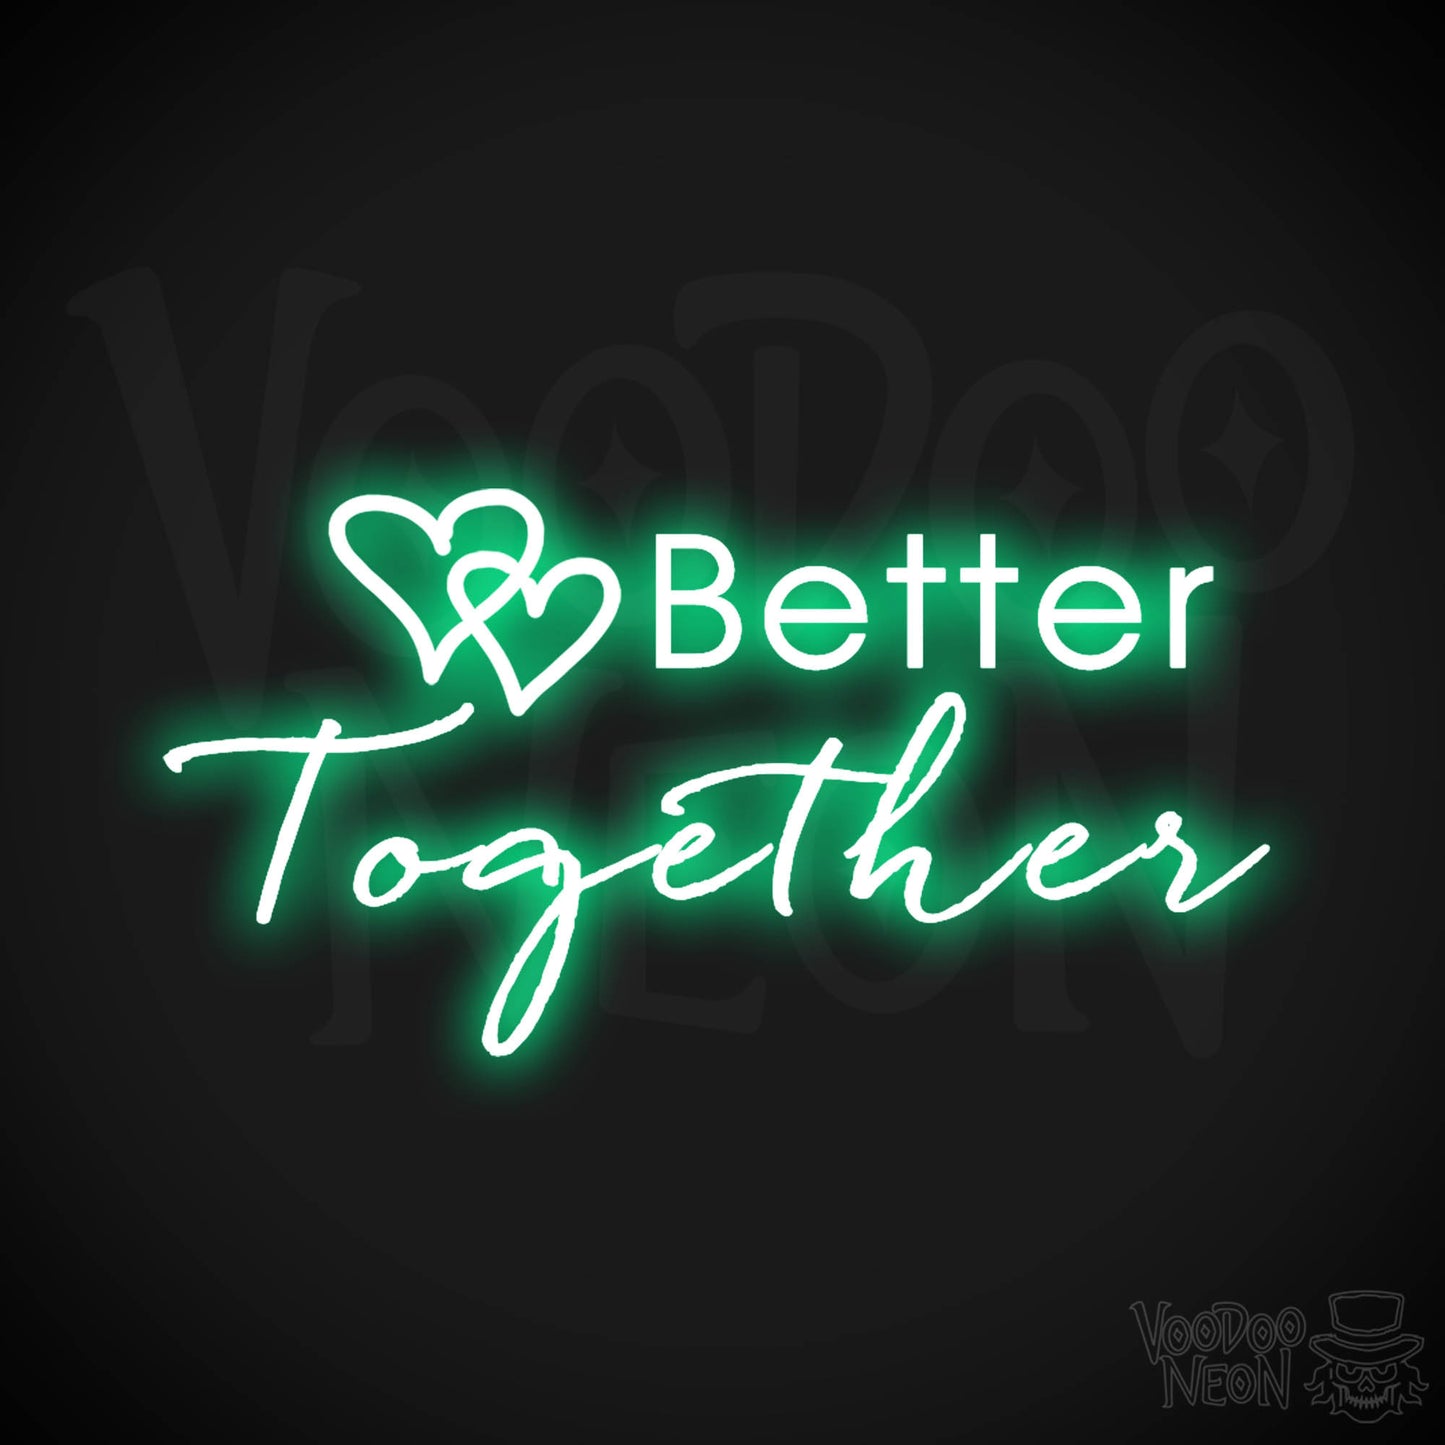 Better Together Neon Sign - Neon Better Together Sign - LED Light Up - Color Green